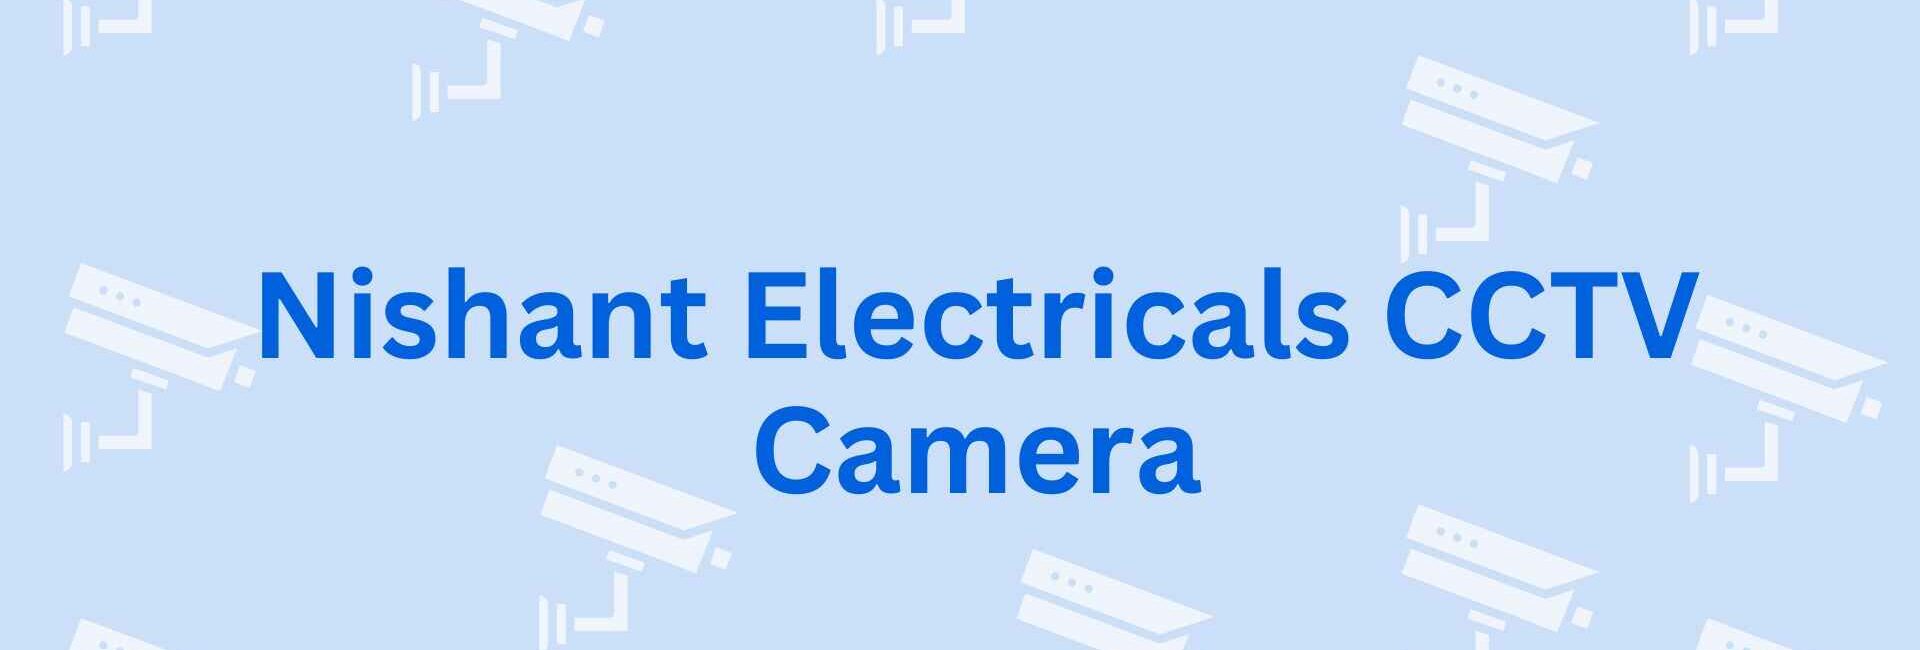 Nishant Electricals CCTV Camera - CCTV Dealer in Noida